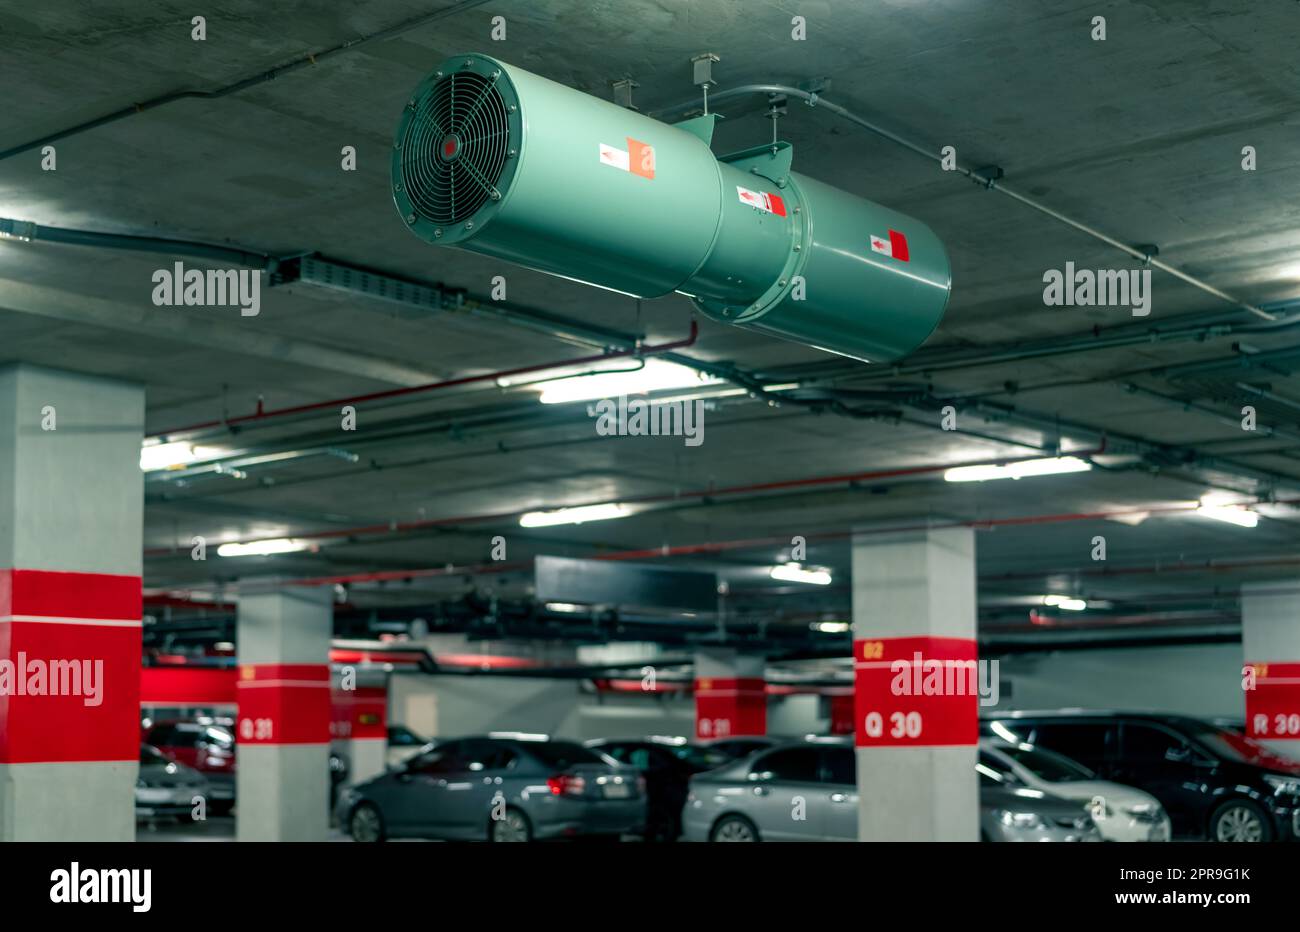 https://c8.alamy.com/comp/2PR9G1K/jet-fan-at-underground-parking-area-ventilation-fan-in-the-parking-lot-air-flow-system-ventilation-system-in-underground-car-parking-lot-at-commercial-building-duct-fan-air-ventilation-at-mall-2PR9G1K.jpg